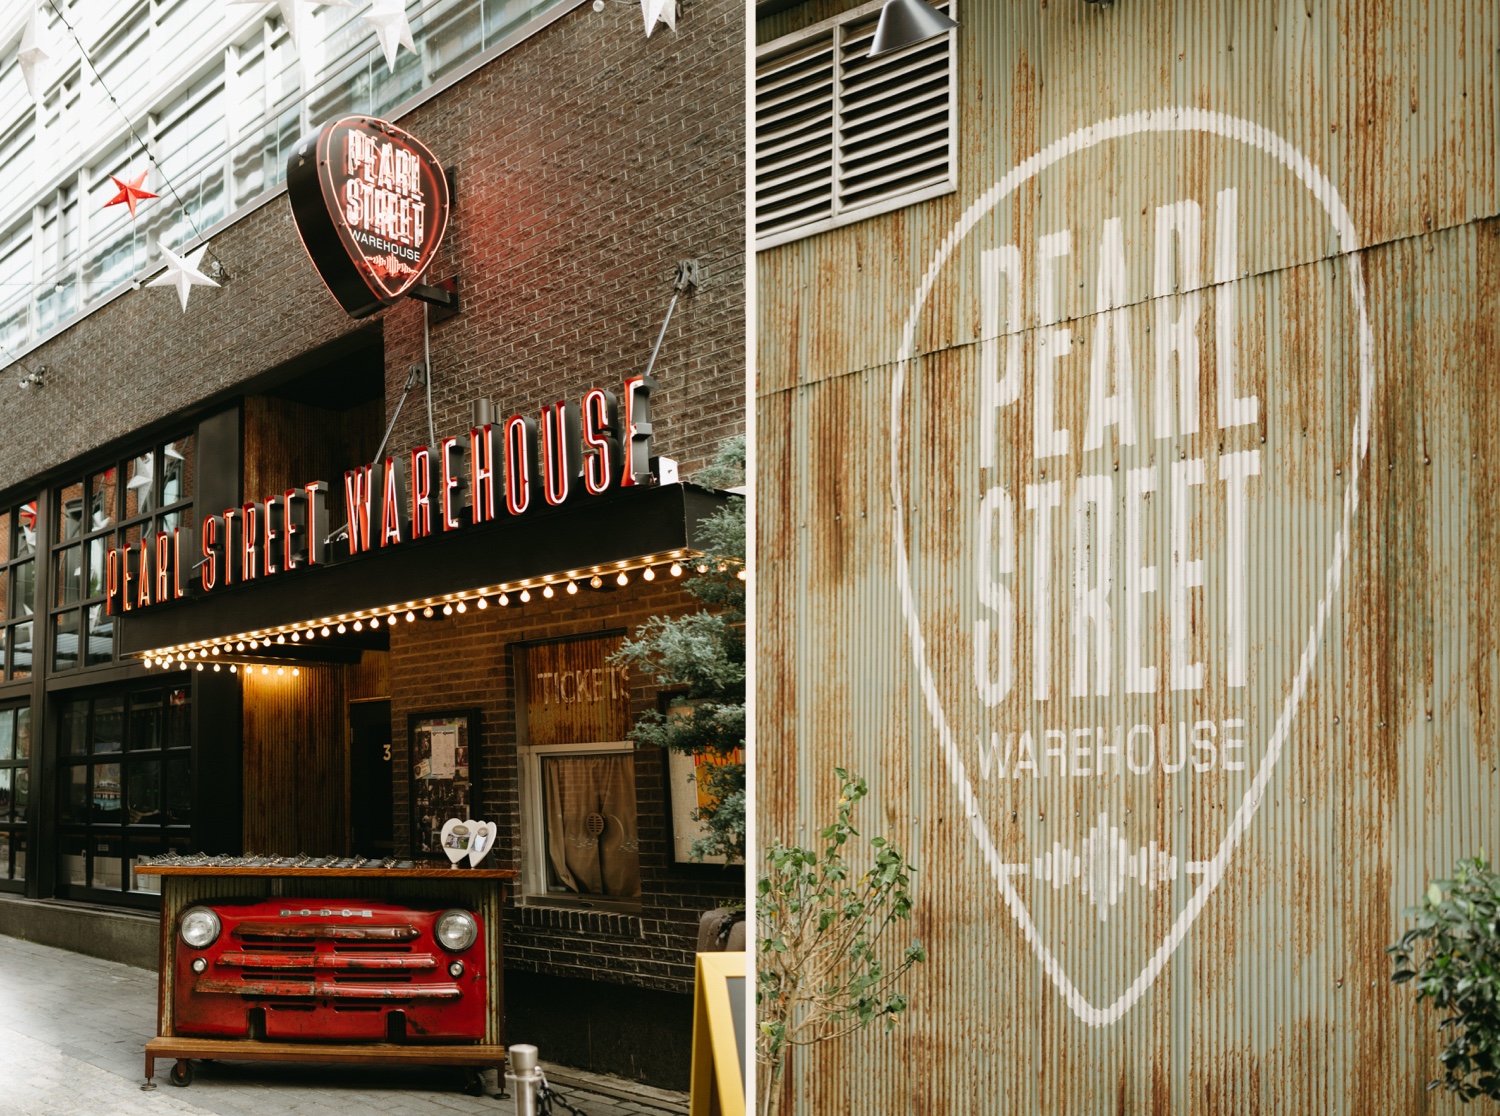 rock bar vow renewal pearl street warehouse